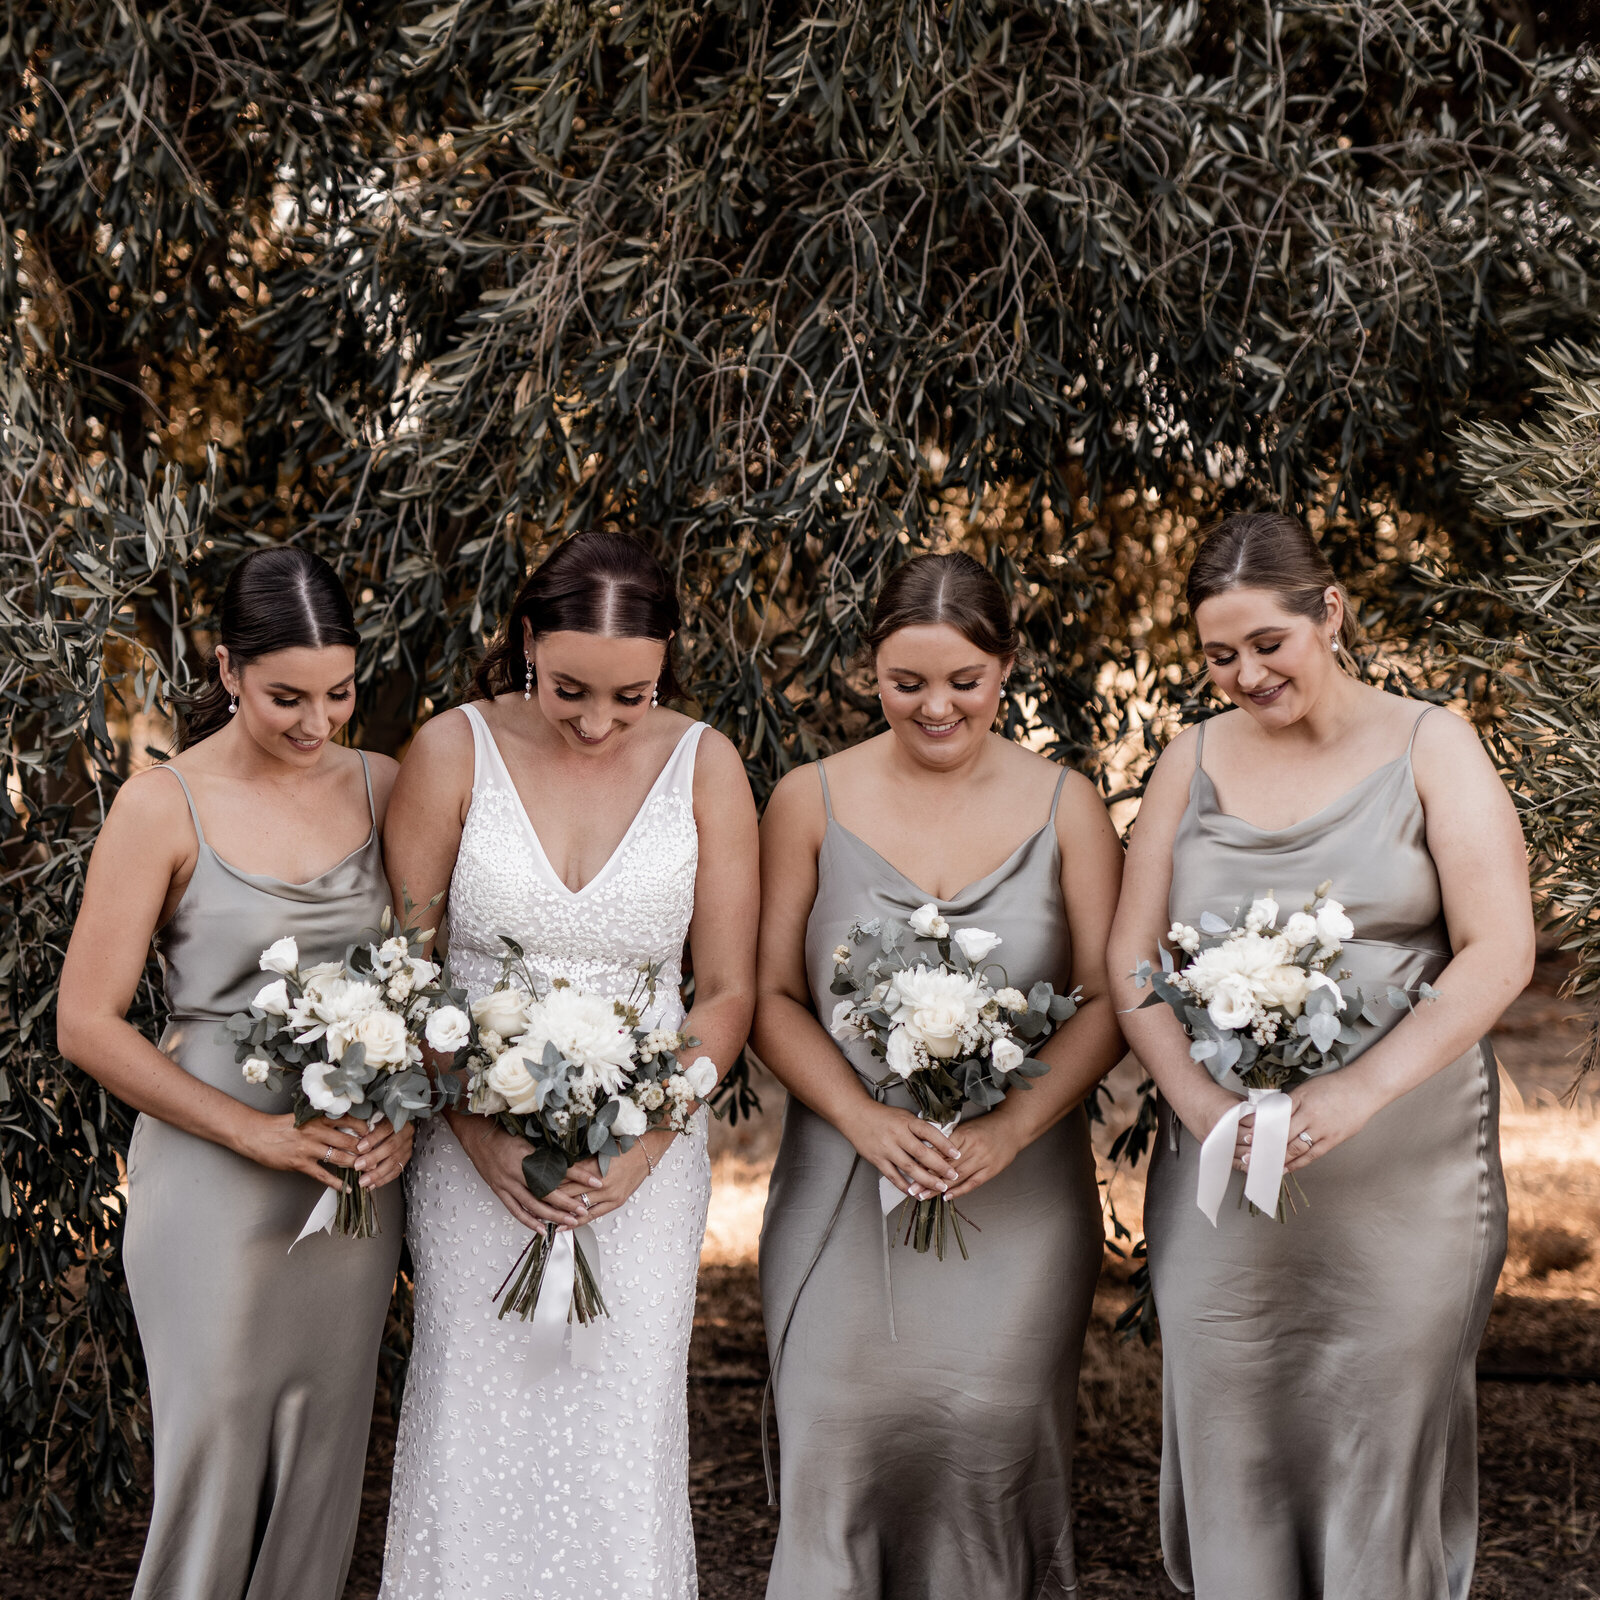 Caitlin-Reece-Rexvil-Photography-Adelaide-Wedding-Photographer-455